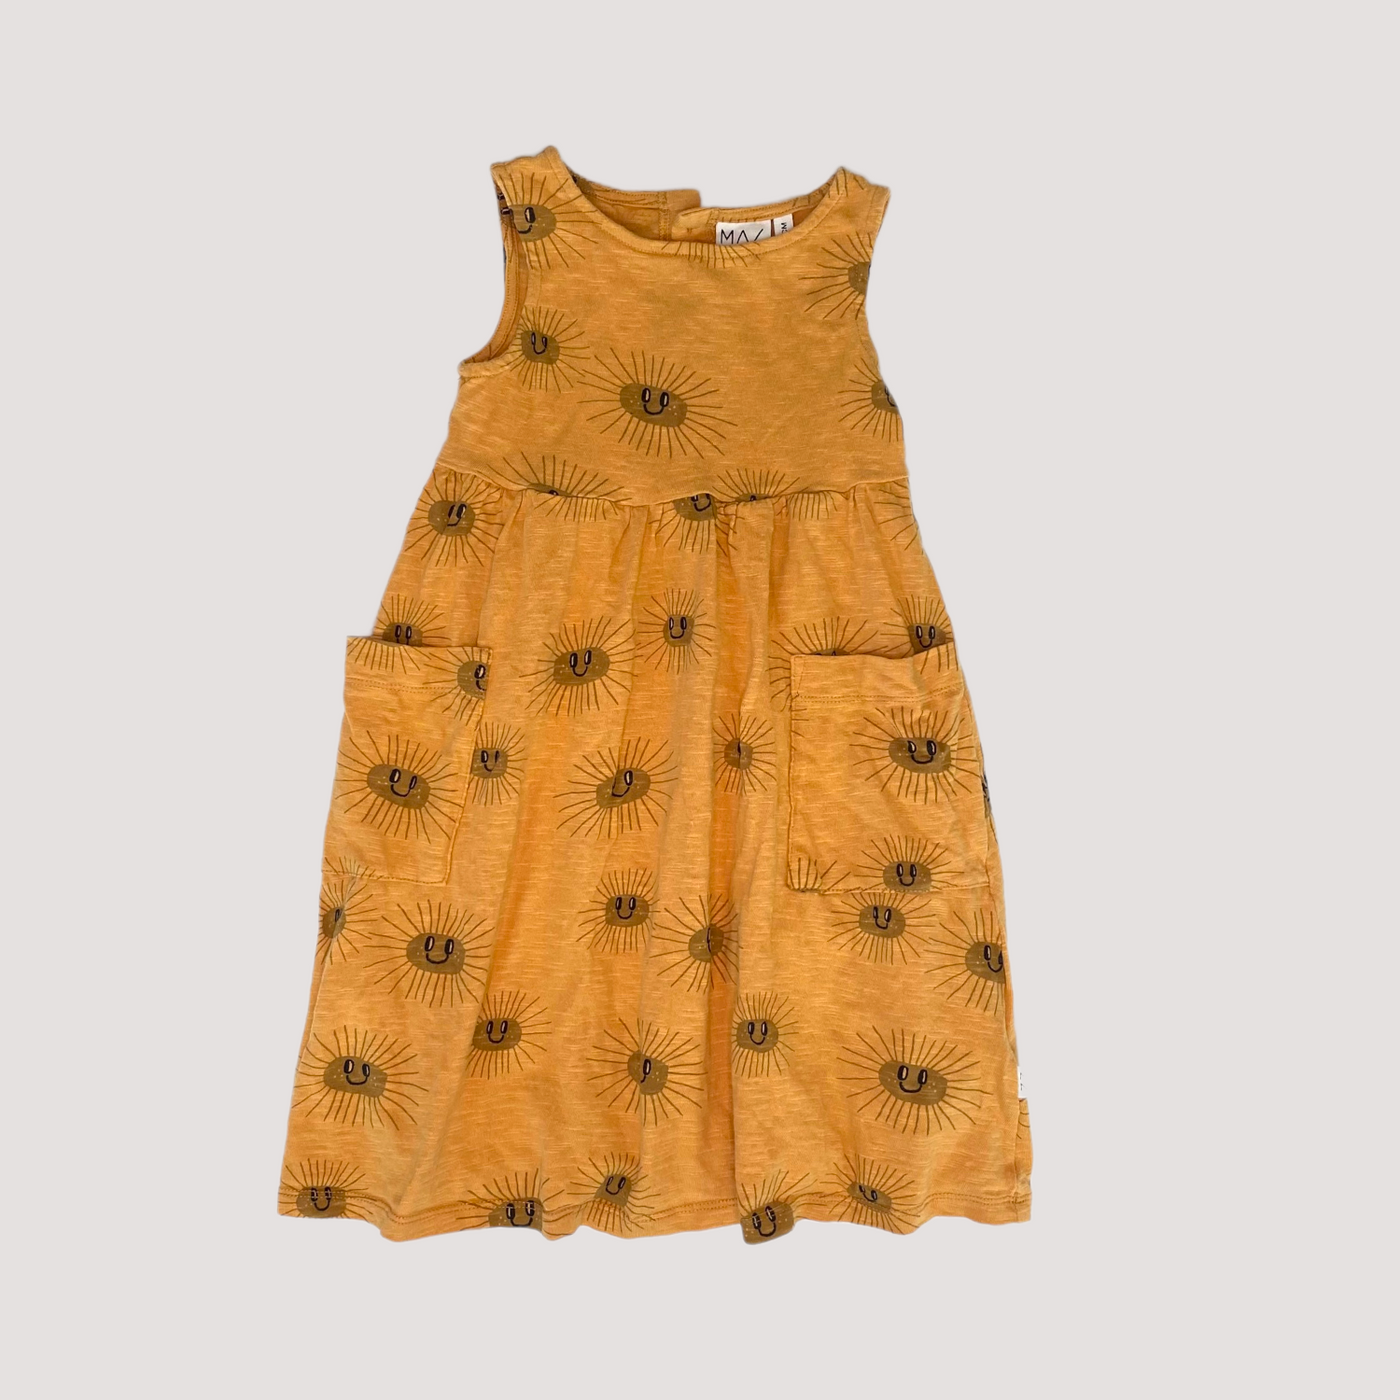 dress, sunny | 86/92cm